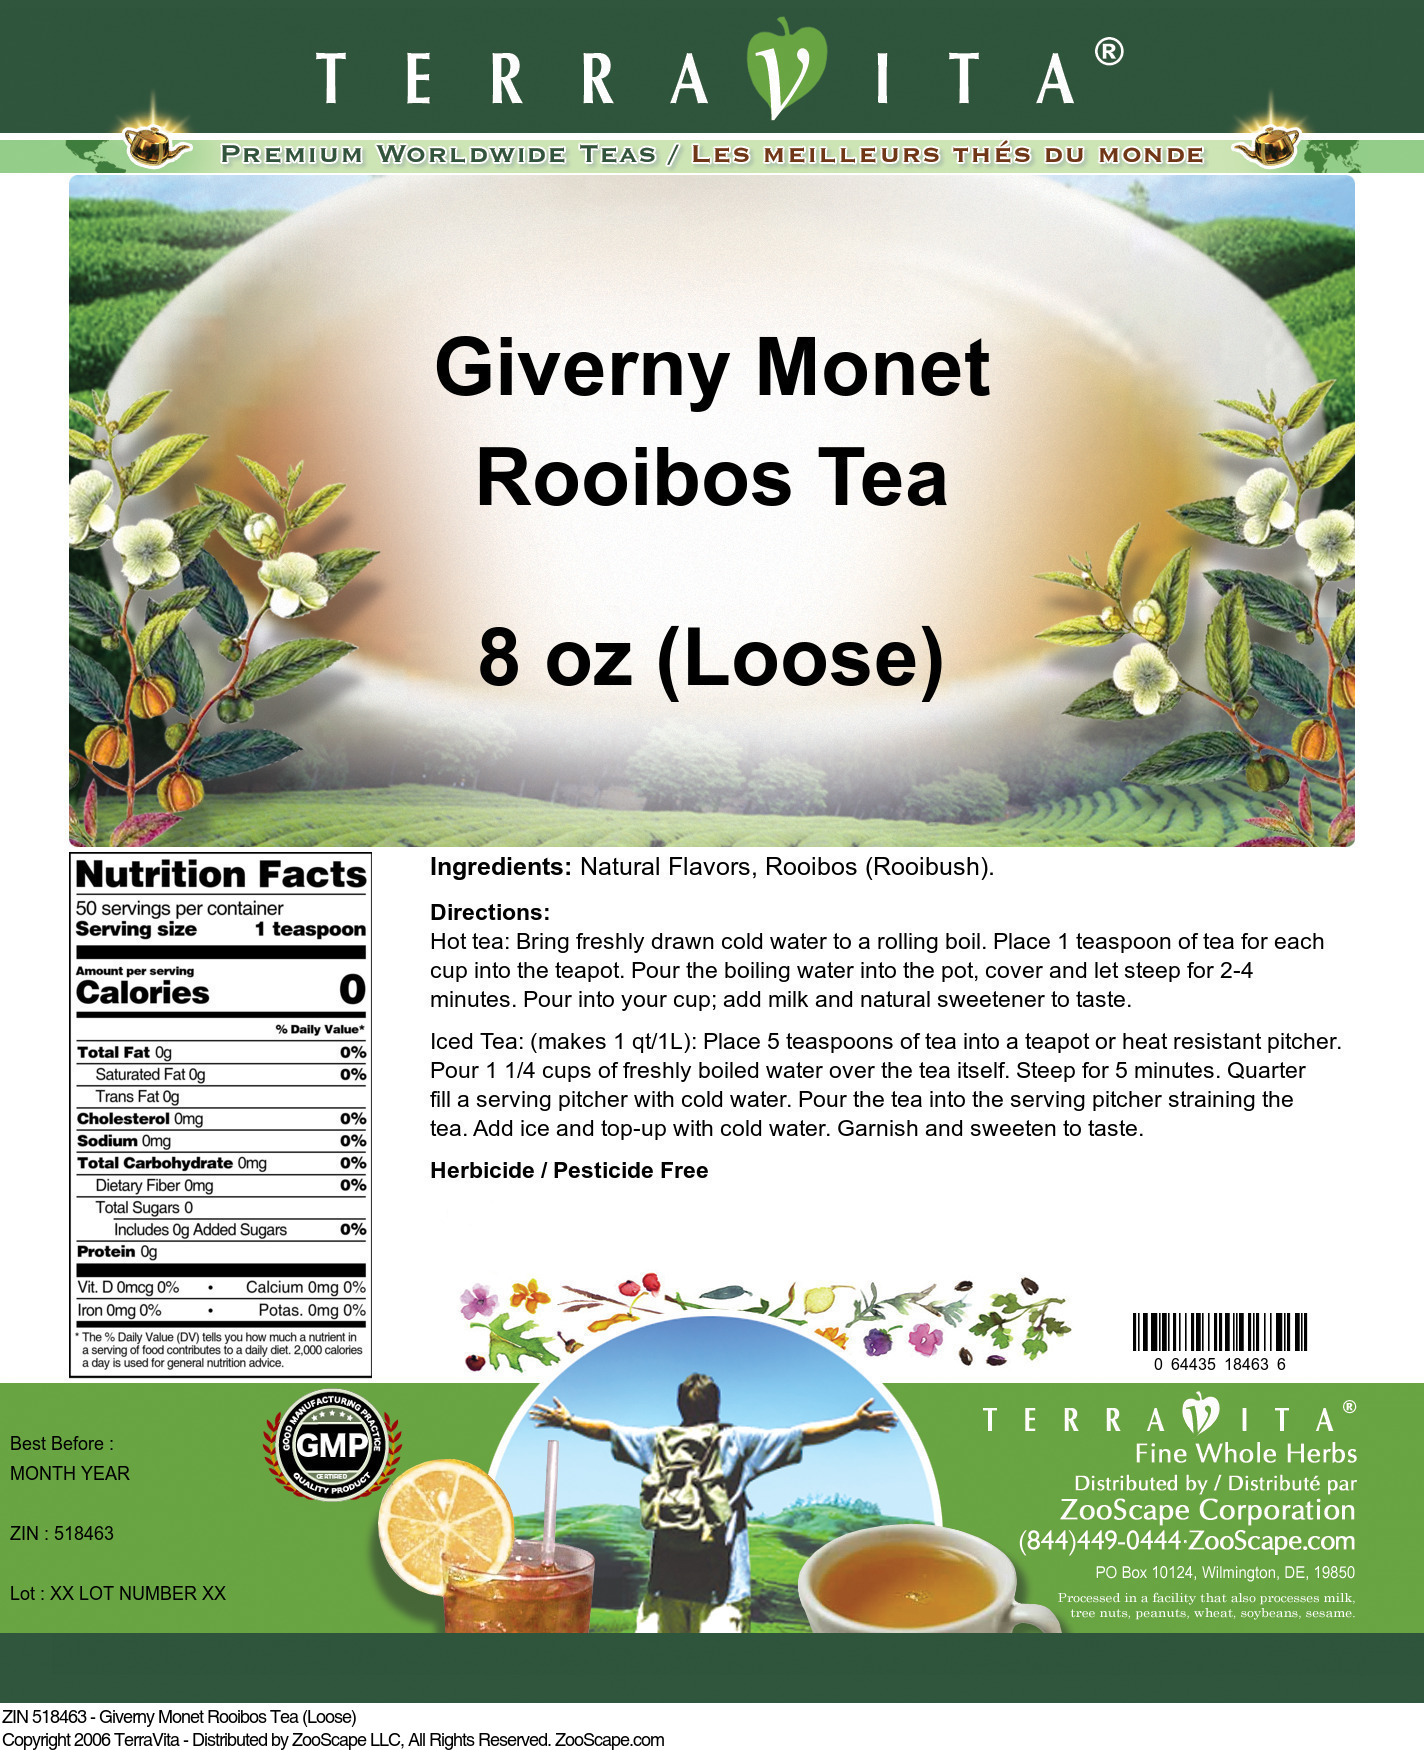 Giverny Monet Rooibos Tea (Loose) - Label